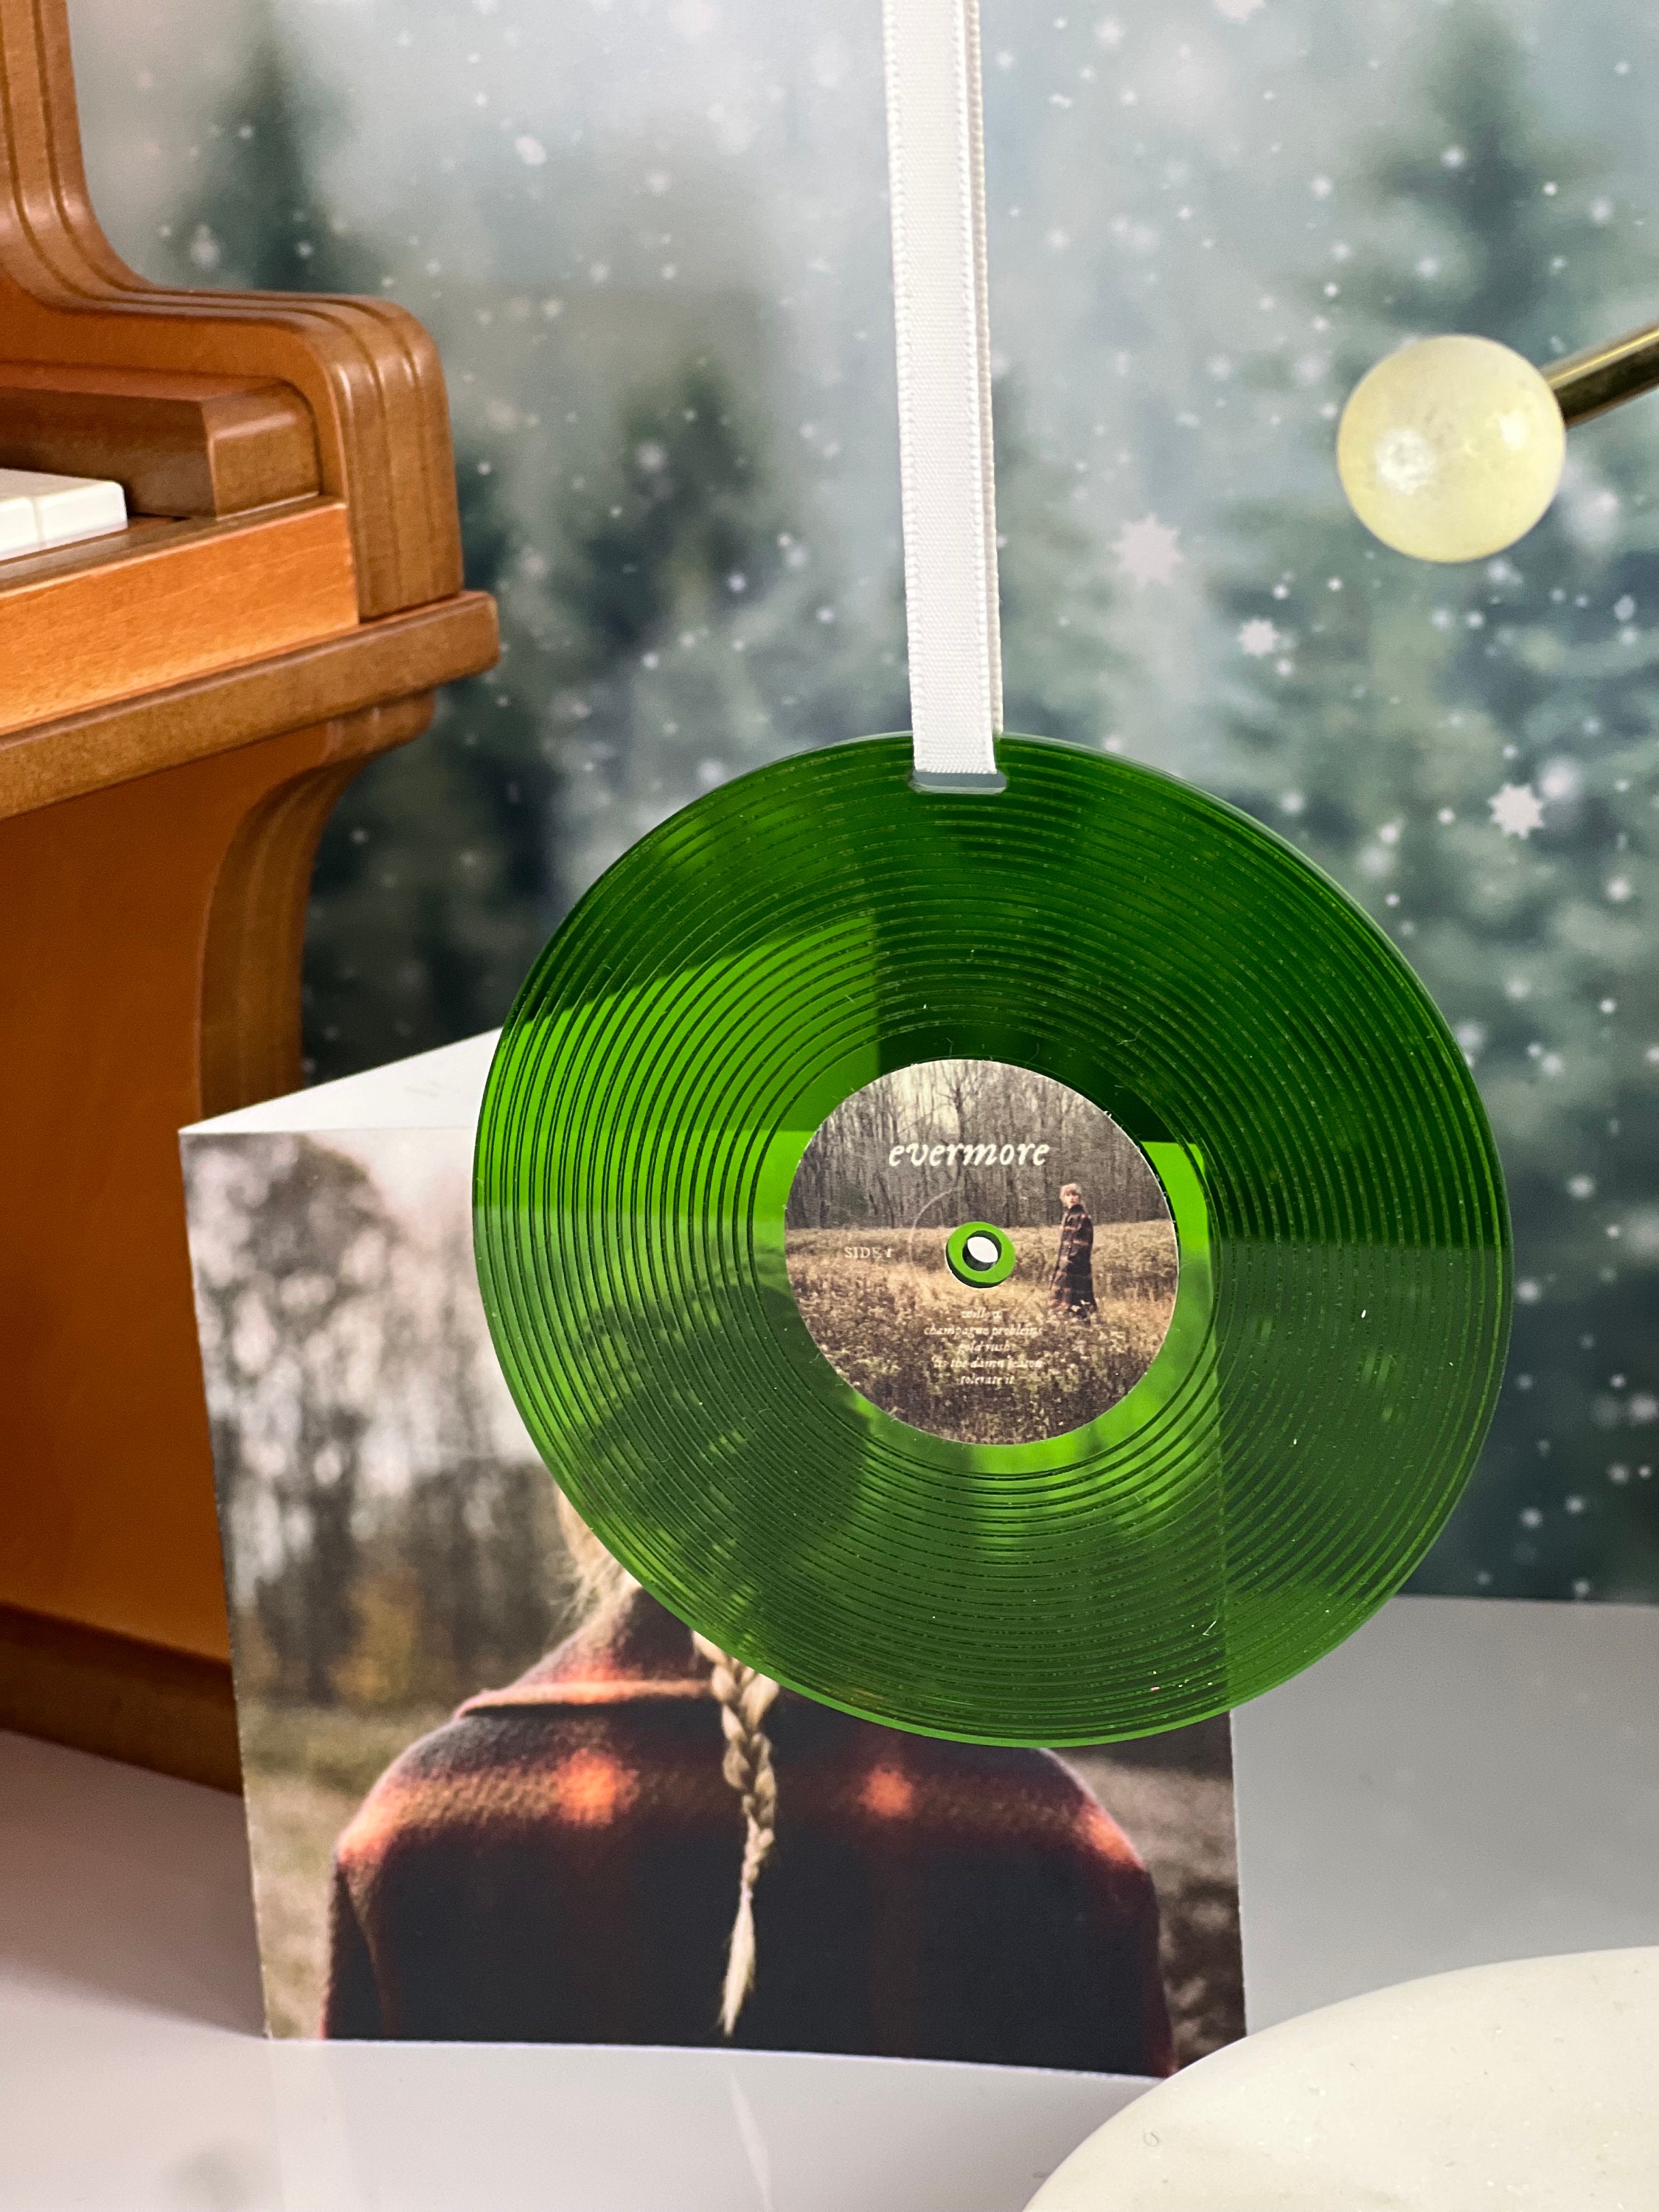 Taylor Swift -Exclusive Colour Vinyl- Evermore Green Vinyl